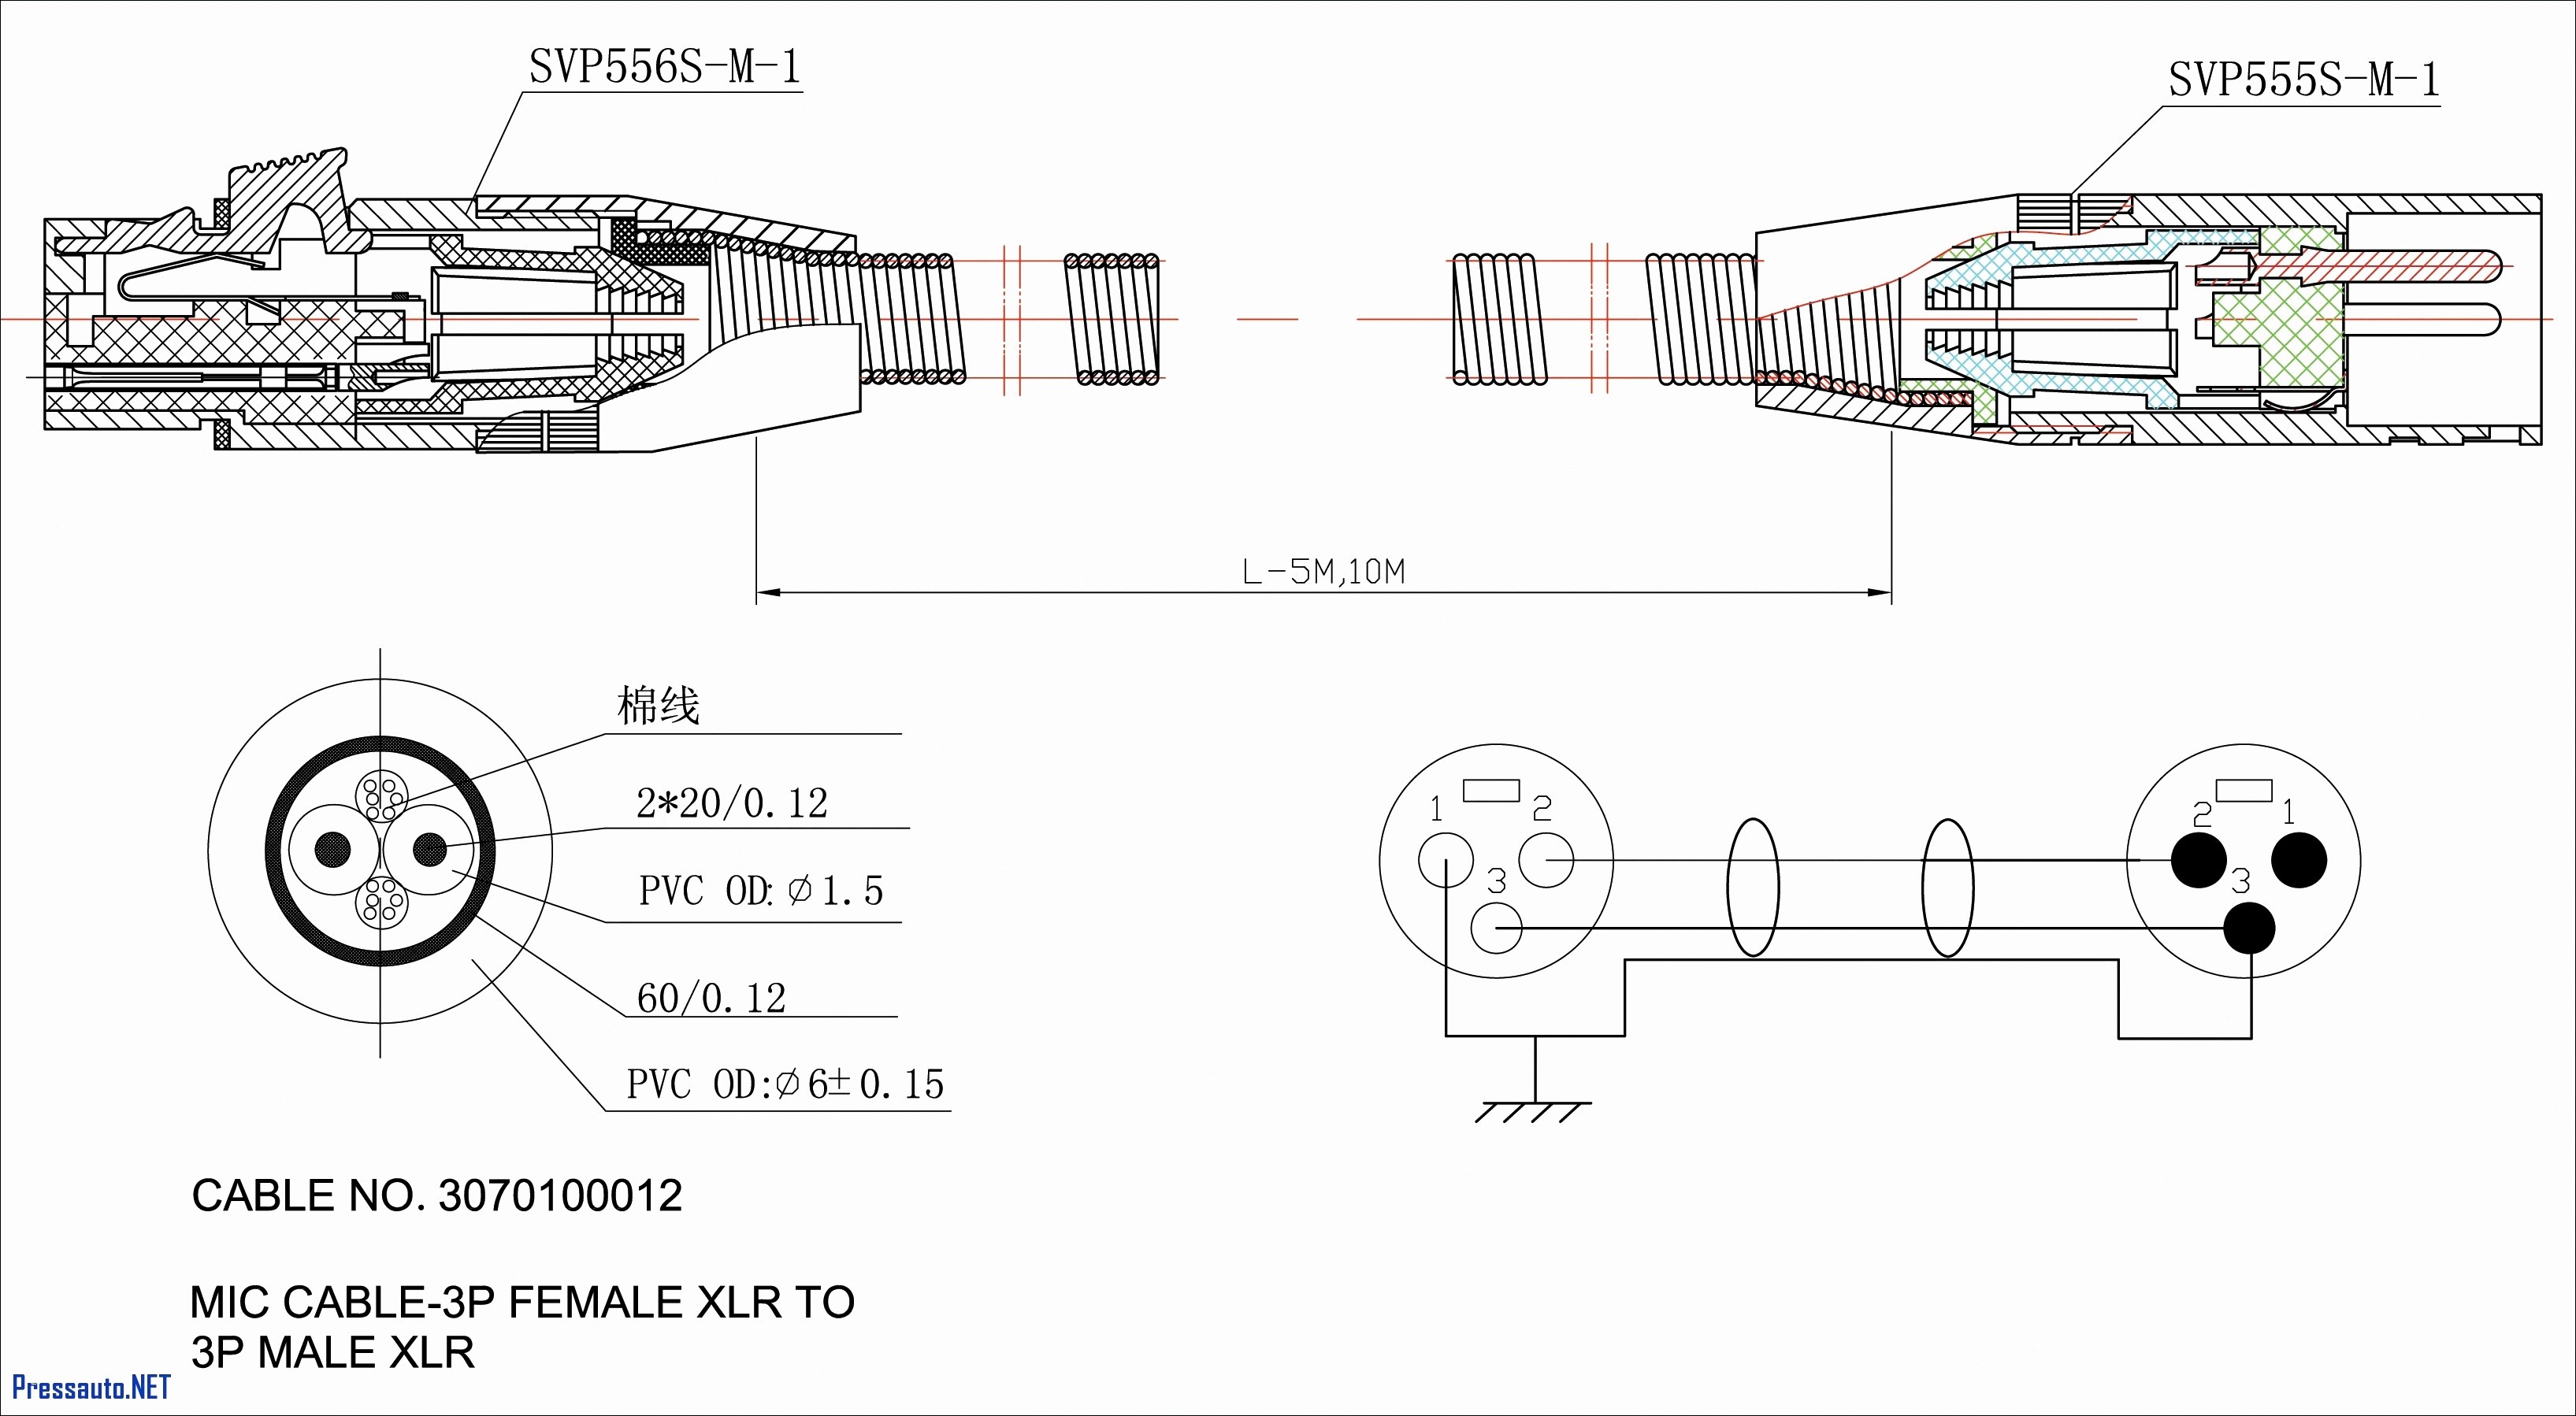 Ford Truck Trailer Wiring Diagram F150 Wiring Diagram 2016 Wiring Diagram toolbox Of Ford Truck Trailer Wiring Diagram